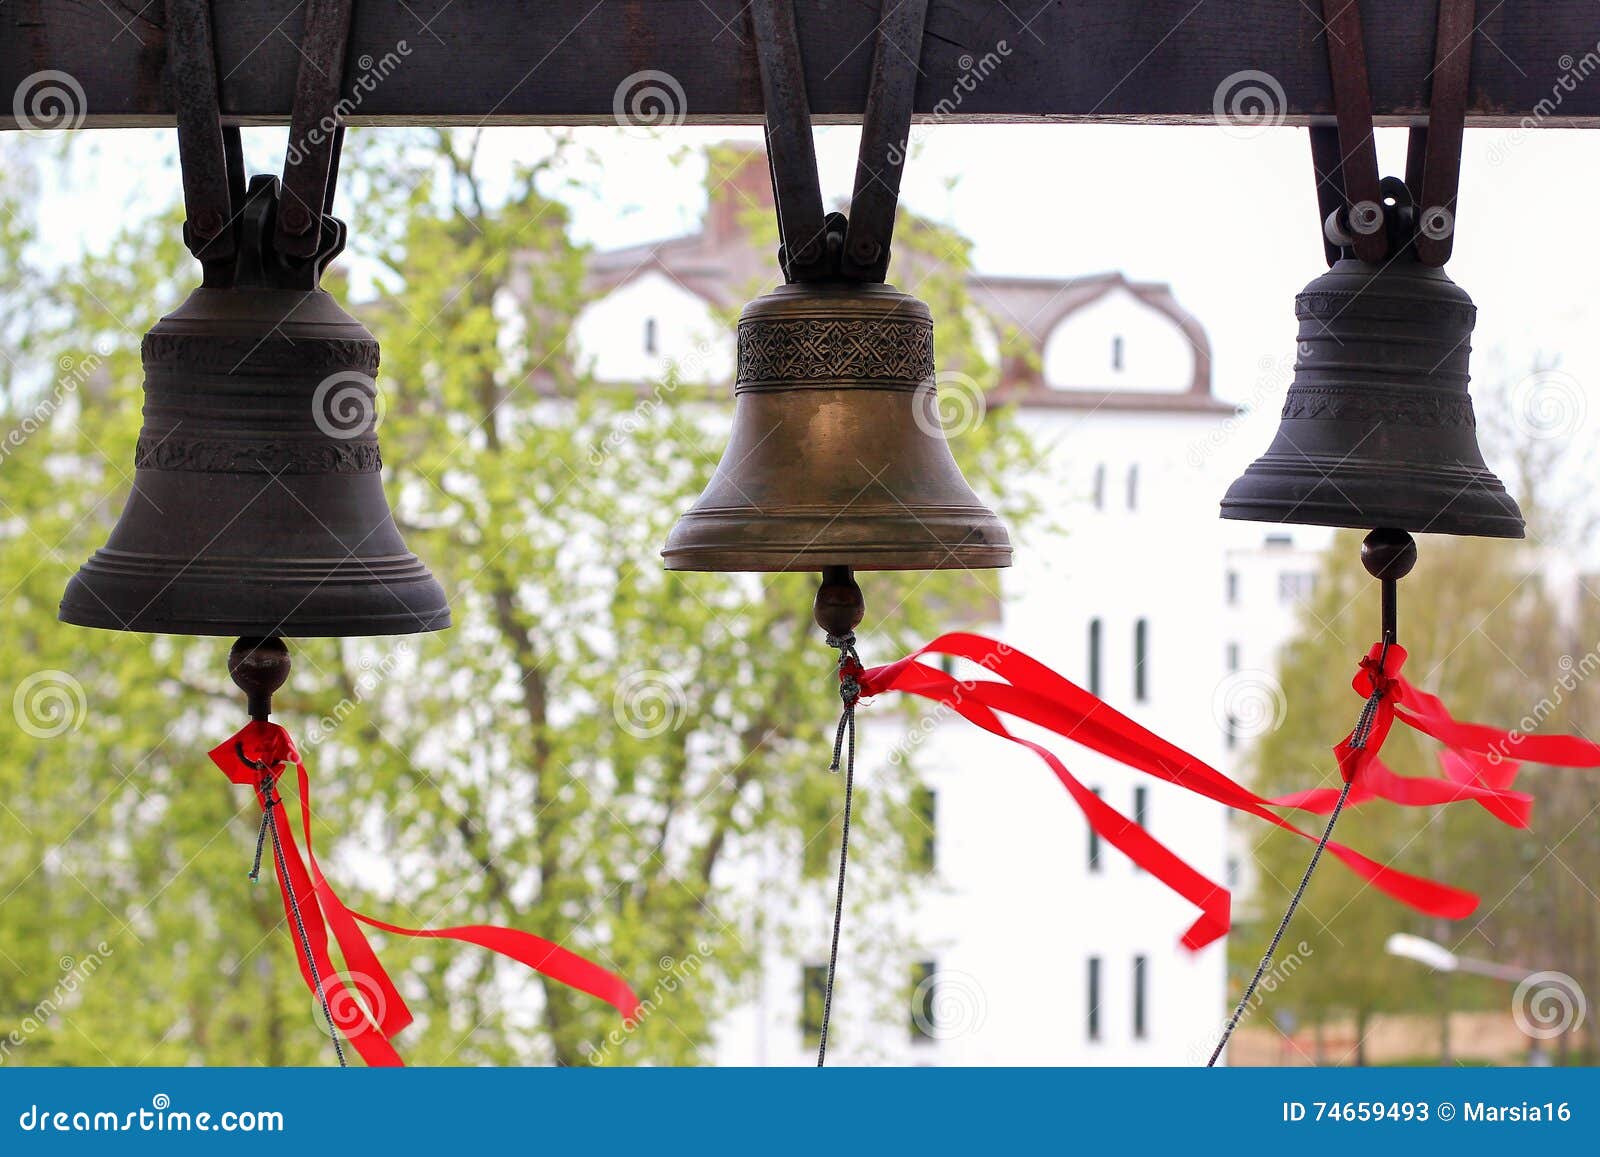 the bell ringer ringing the church bells.